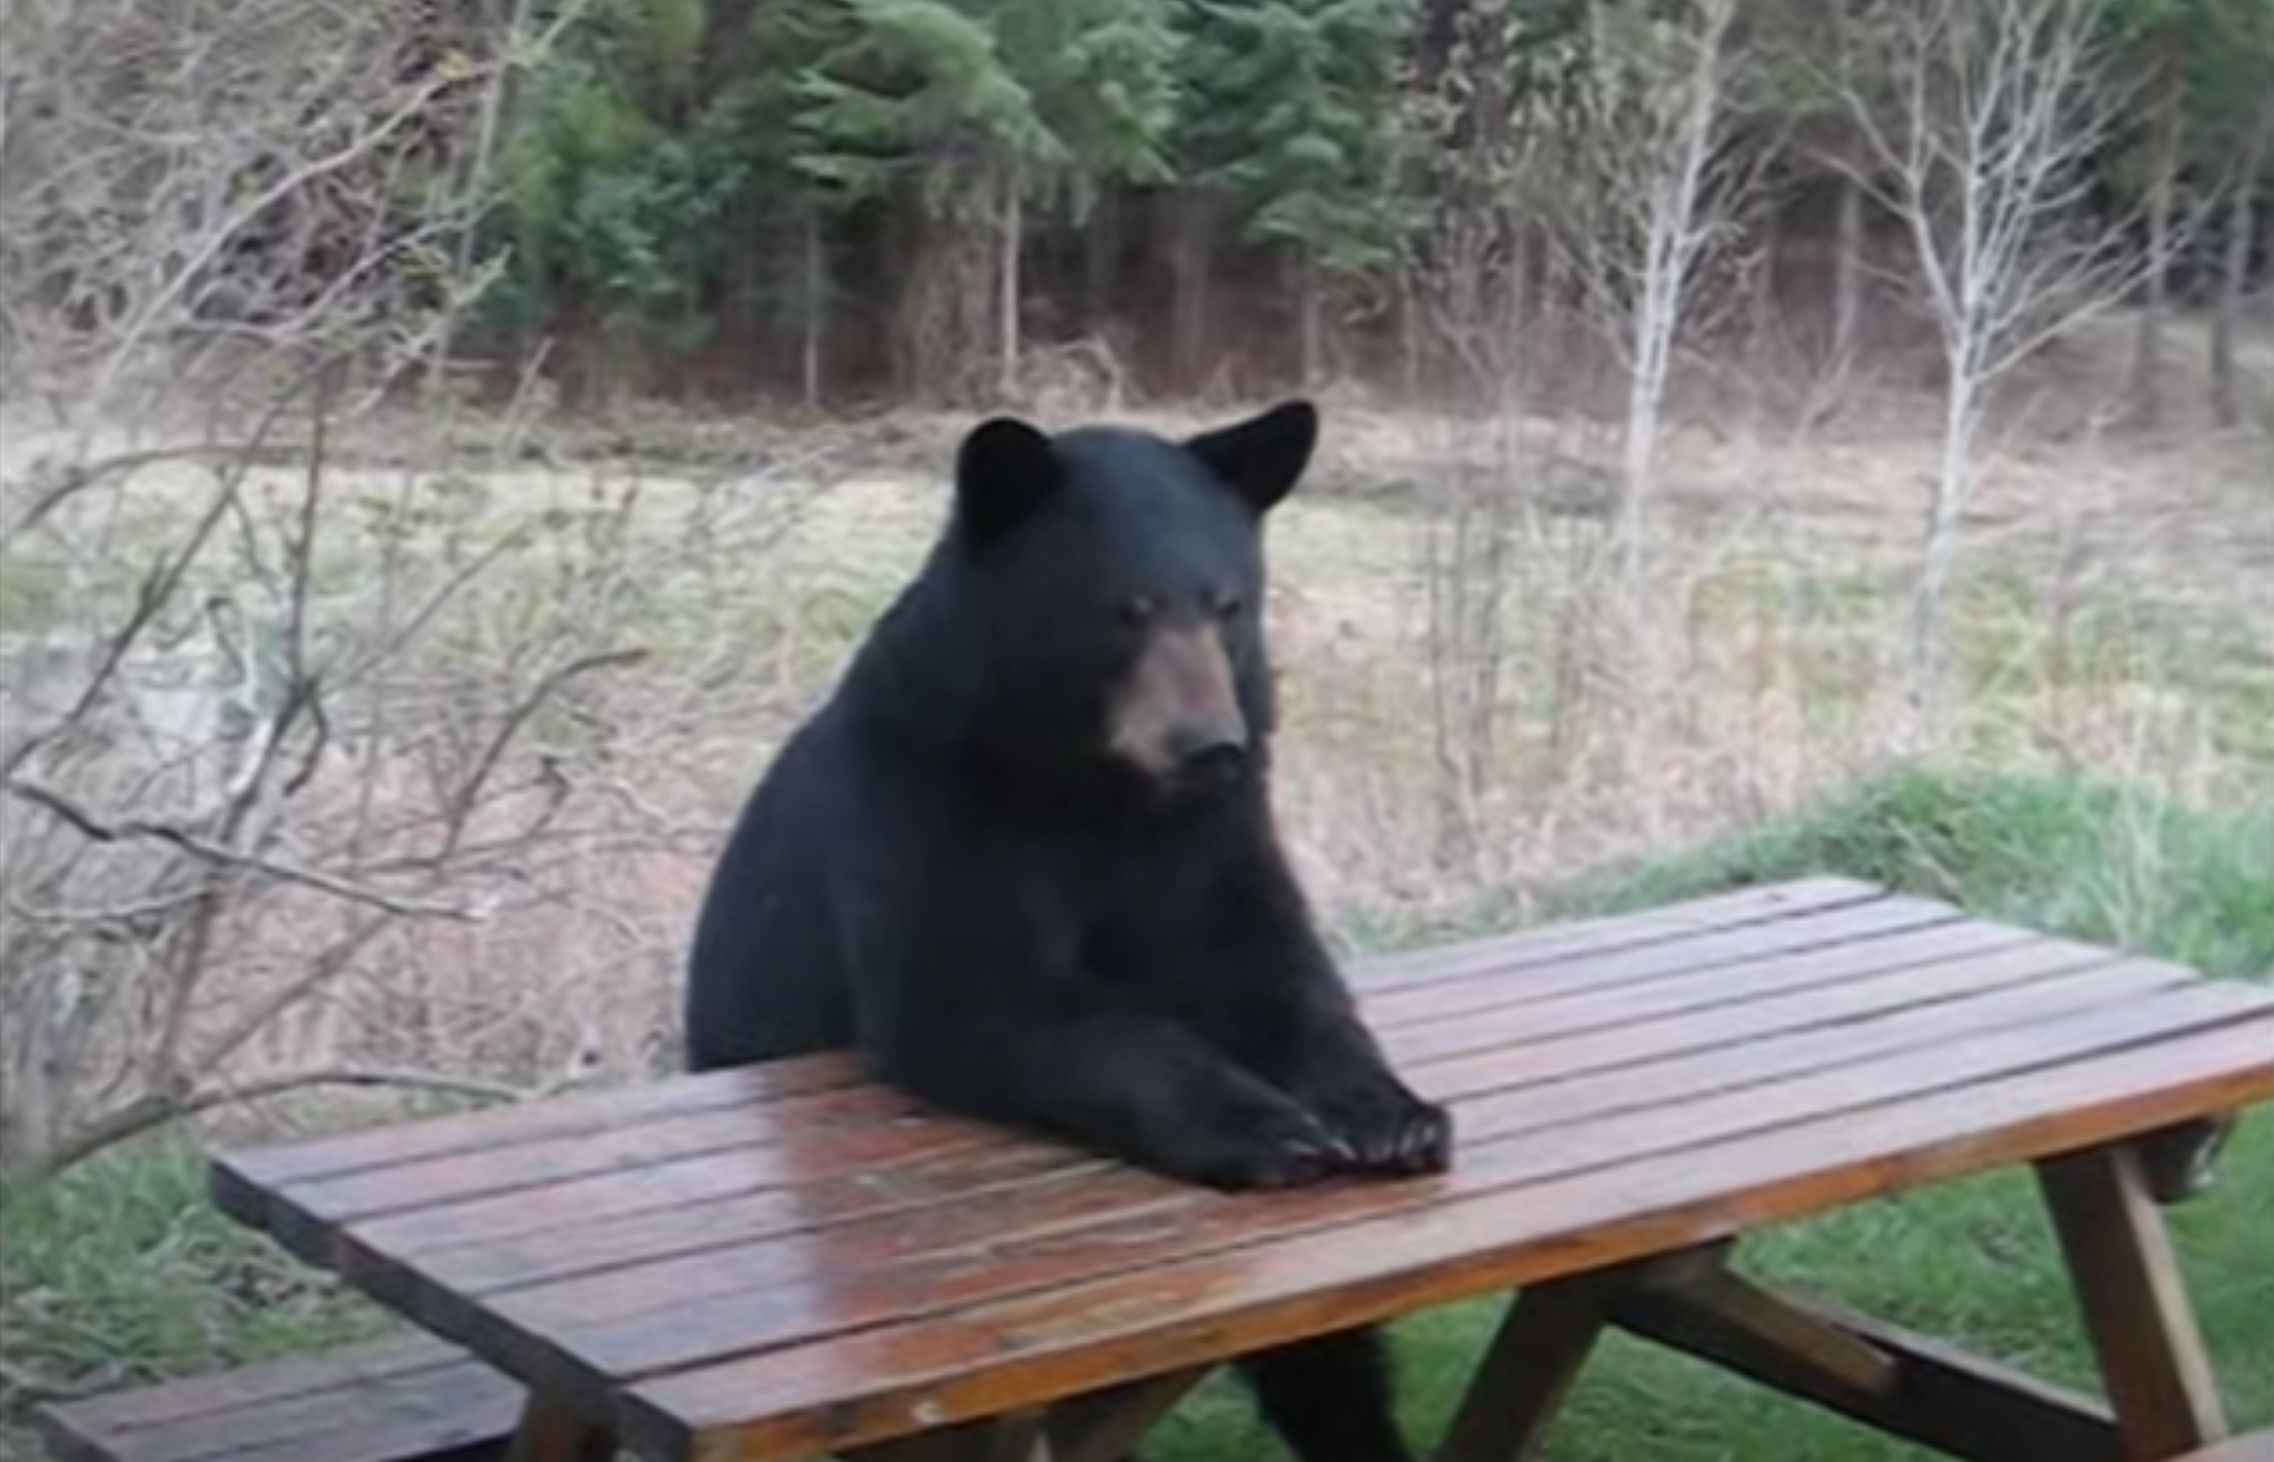 Fun footage of real teddy bear picnics